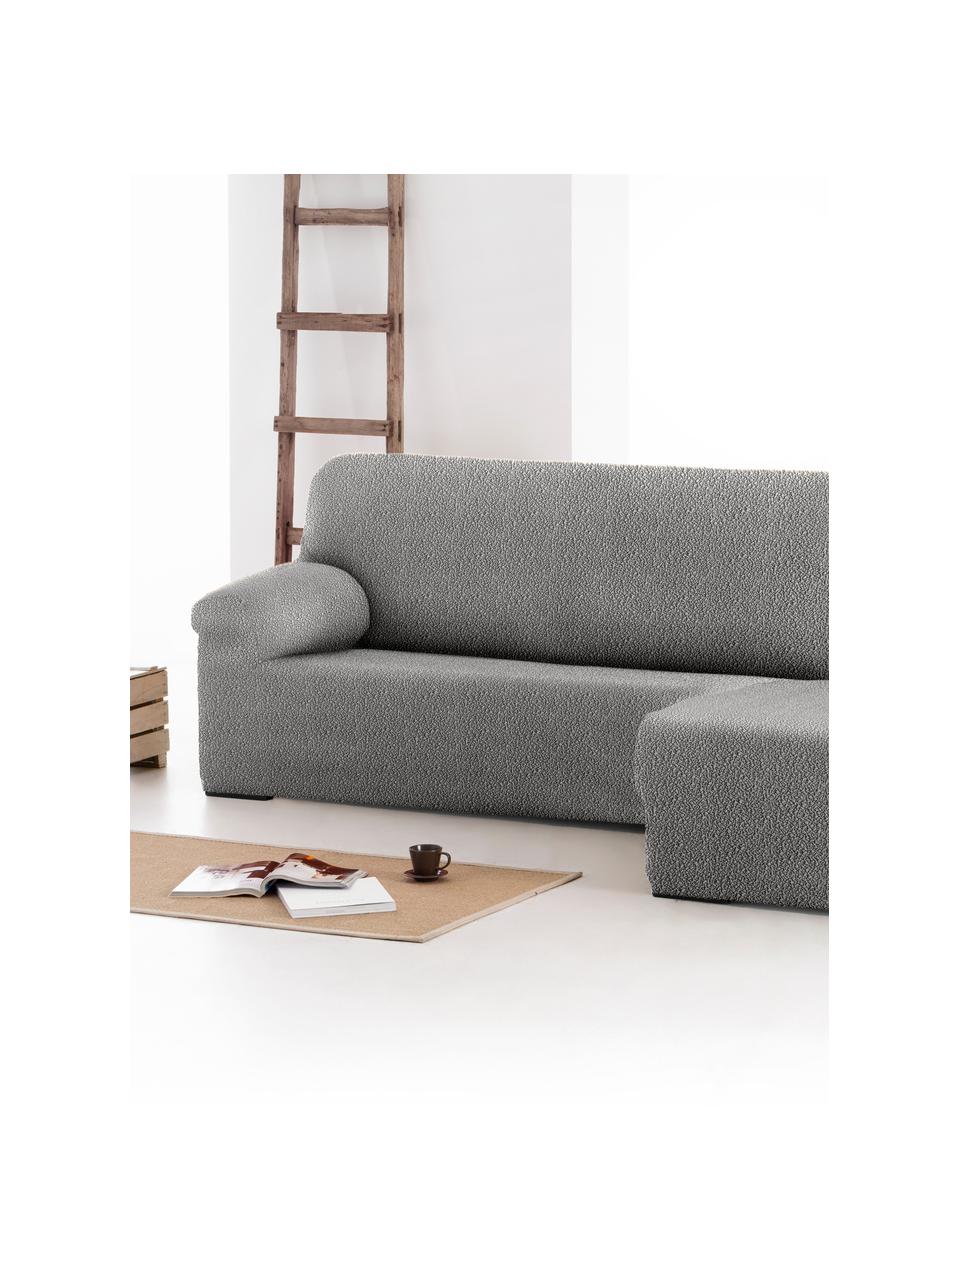 Funda de sofá rinconero Roc, 55% poliéster, 35% algodón, 10% elastómero, Gris, An 360 x F 180 cm, chaise longue derecha